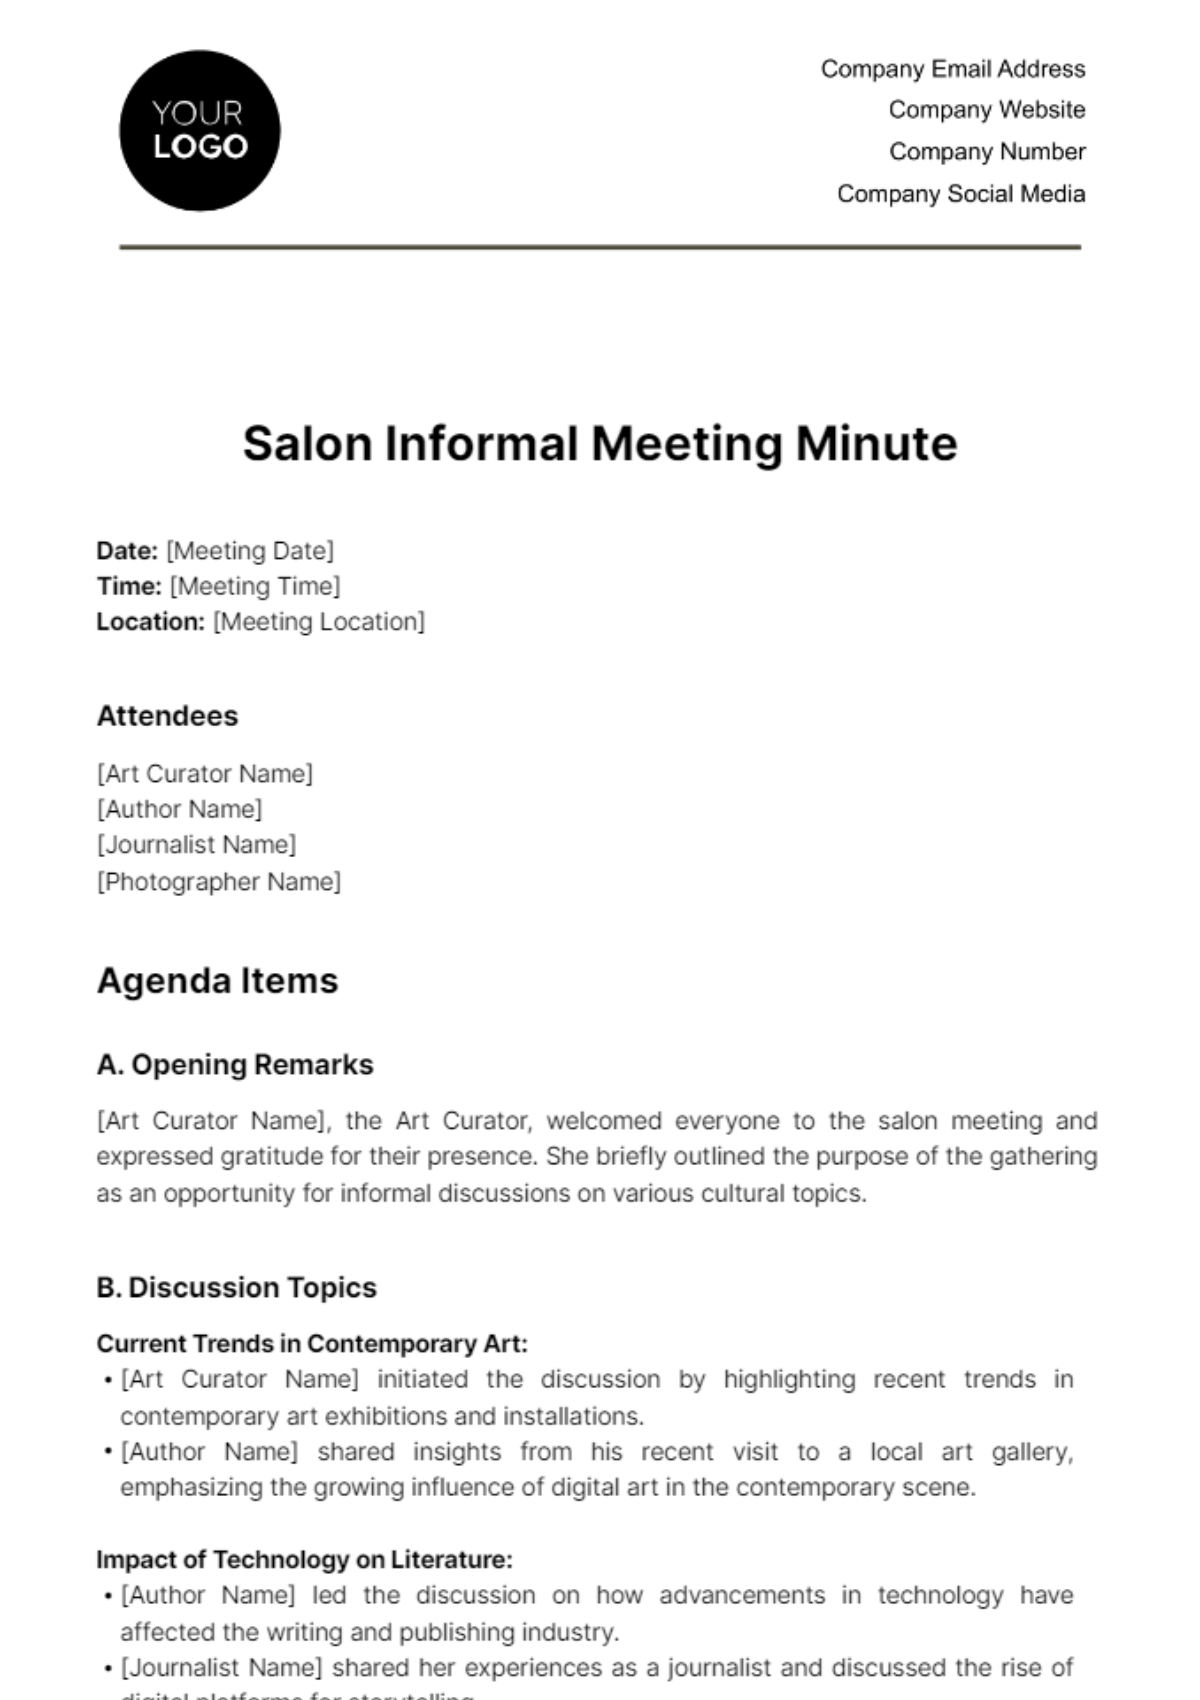 Salon Informal Meeting Minute Template